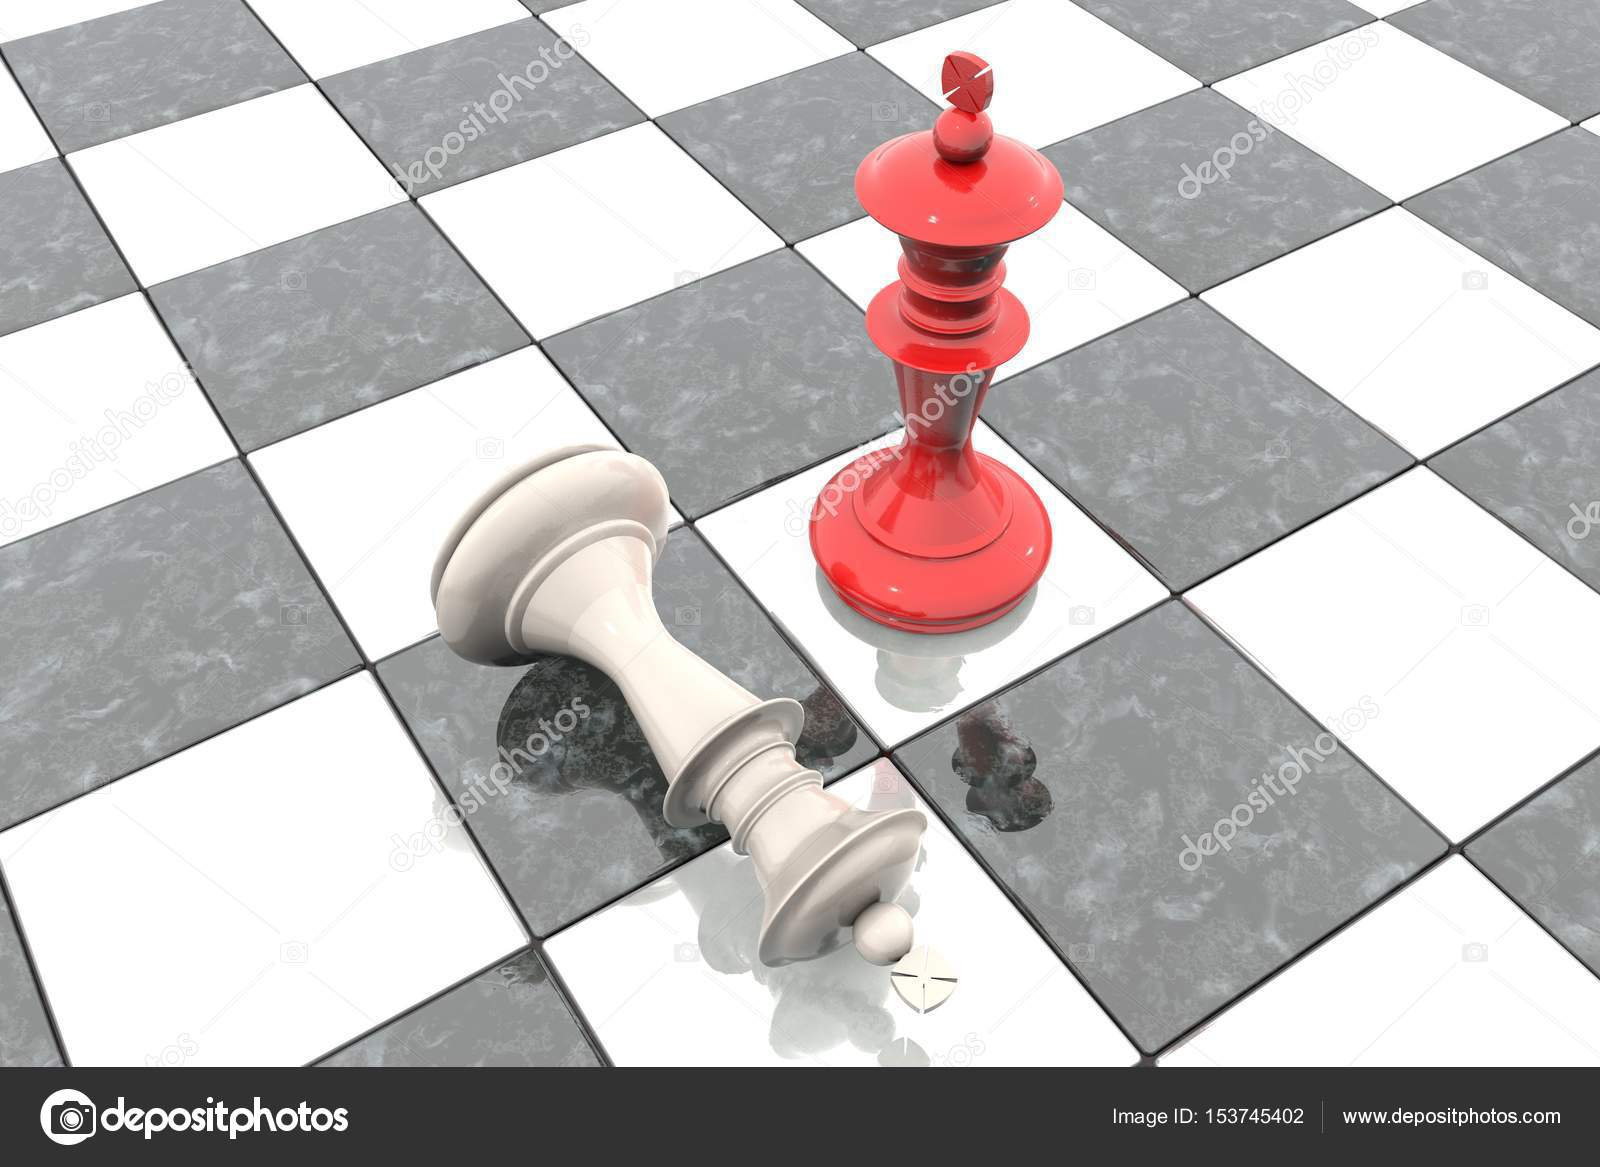 Tabuleiro de Jogo de Xadrez 3d Render isolado fundo branco vista de  perspectiva Stock-Illustration